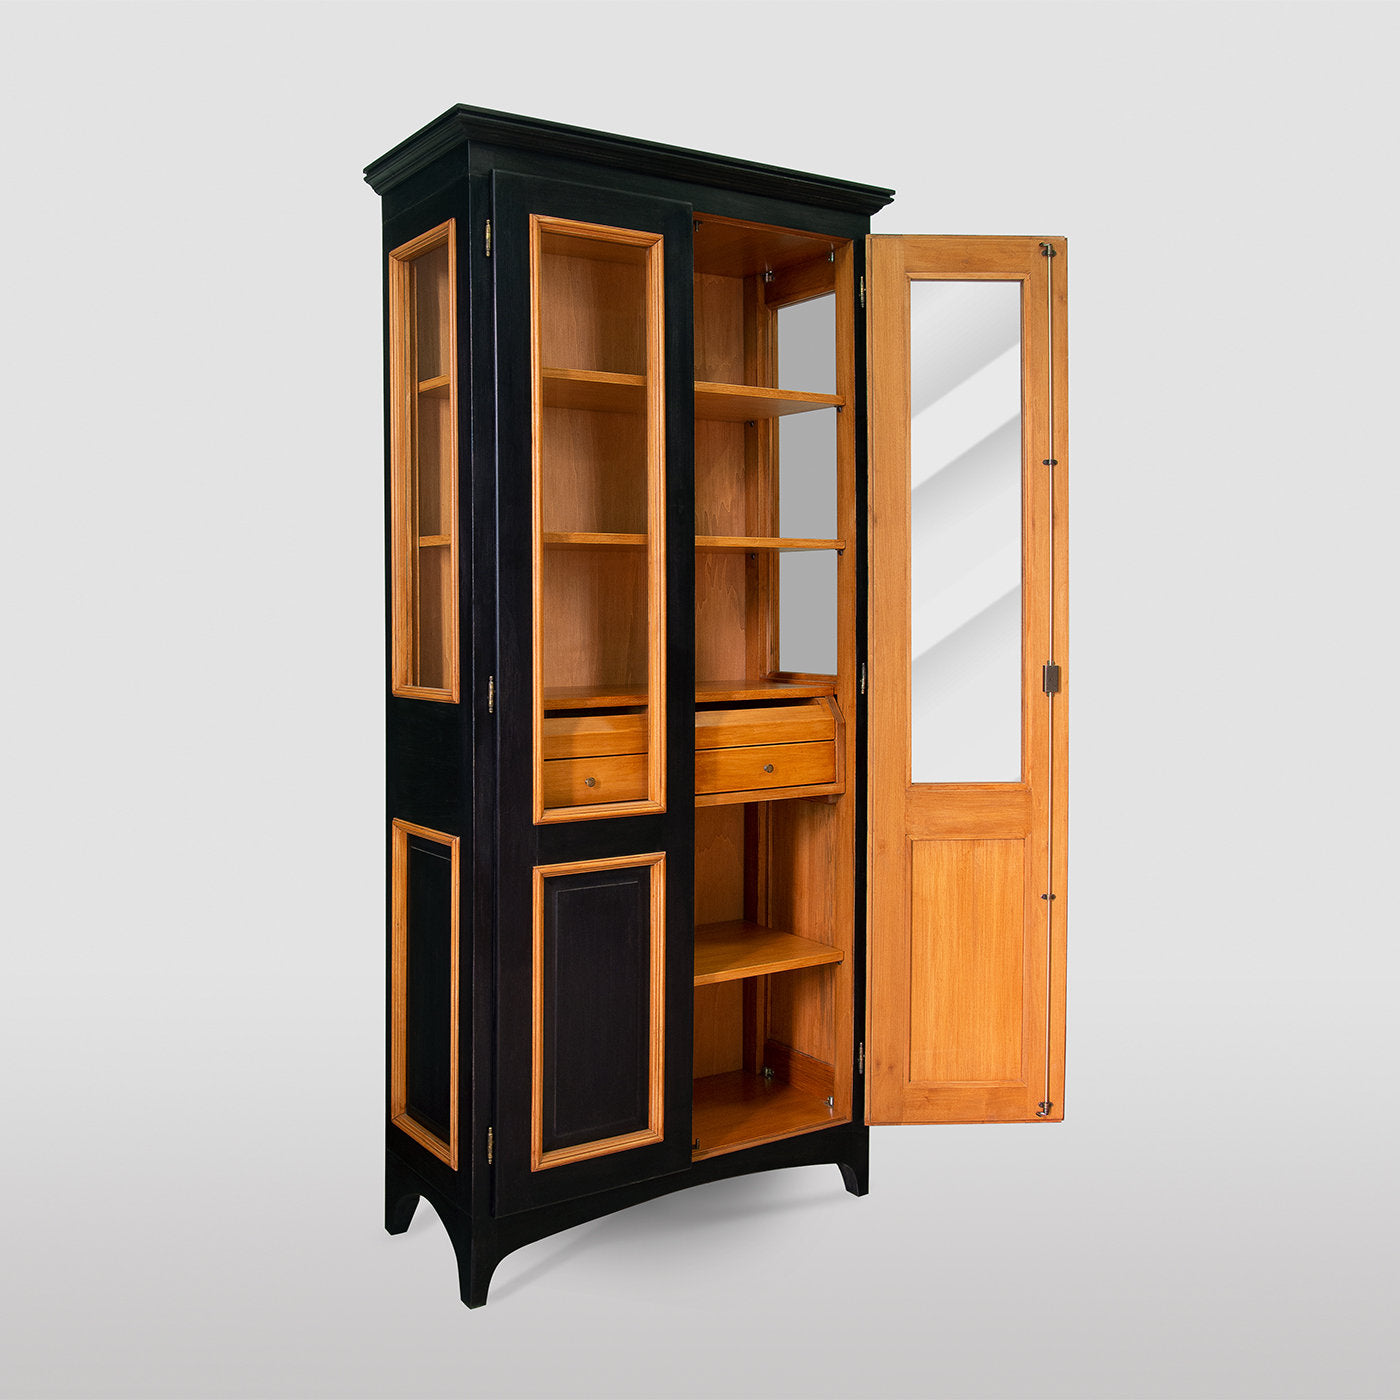 Mini Black Display Cabinet by Erika Gambella - Alternative view 1